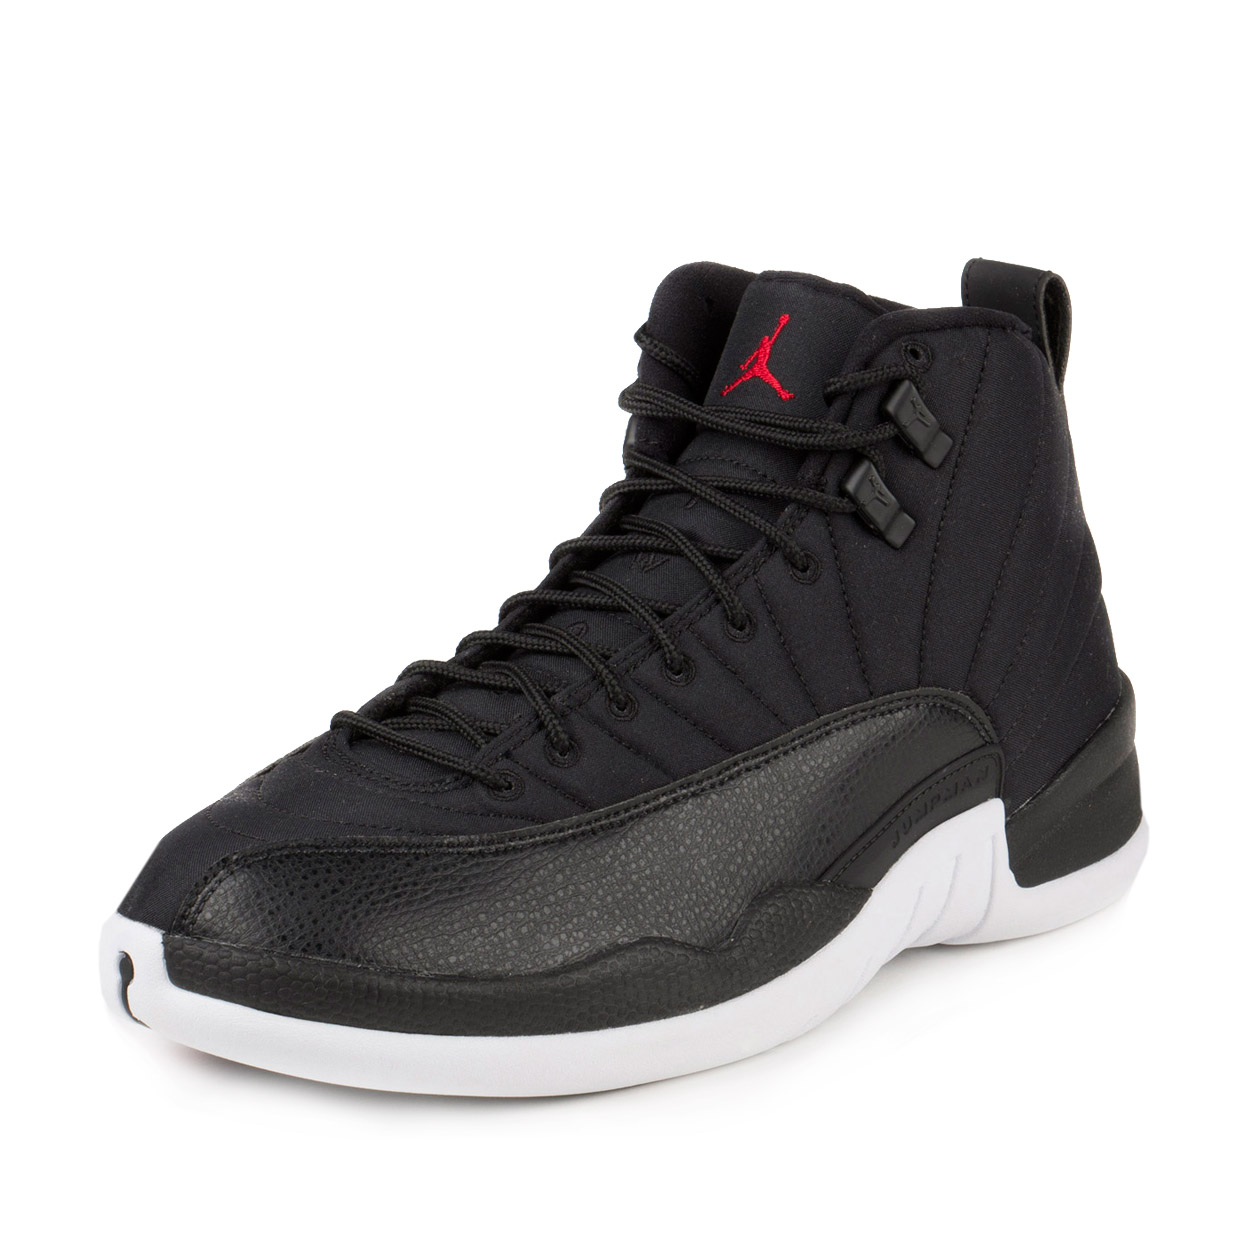 Nike Mens Air Jordan 12 Retro "NEOPRENE" Black/Gym Red-White 130690-004 - image 1 of 5